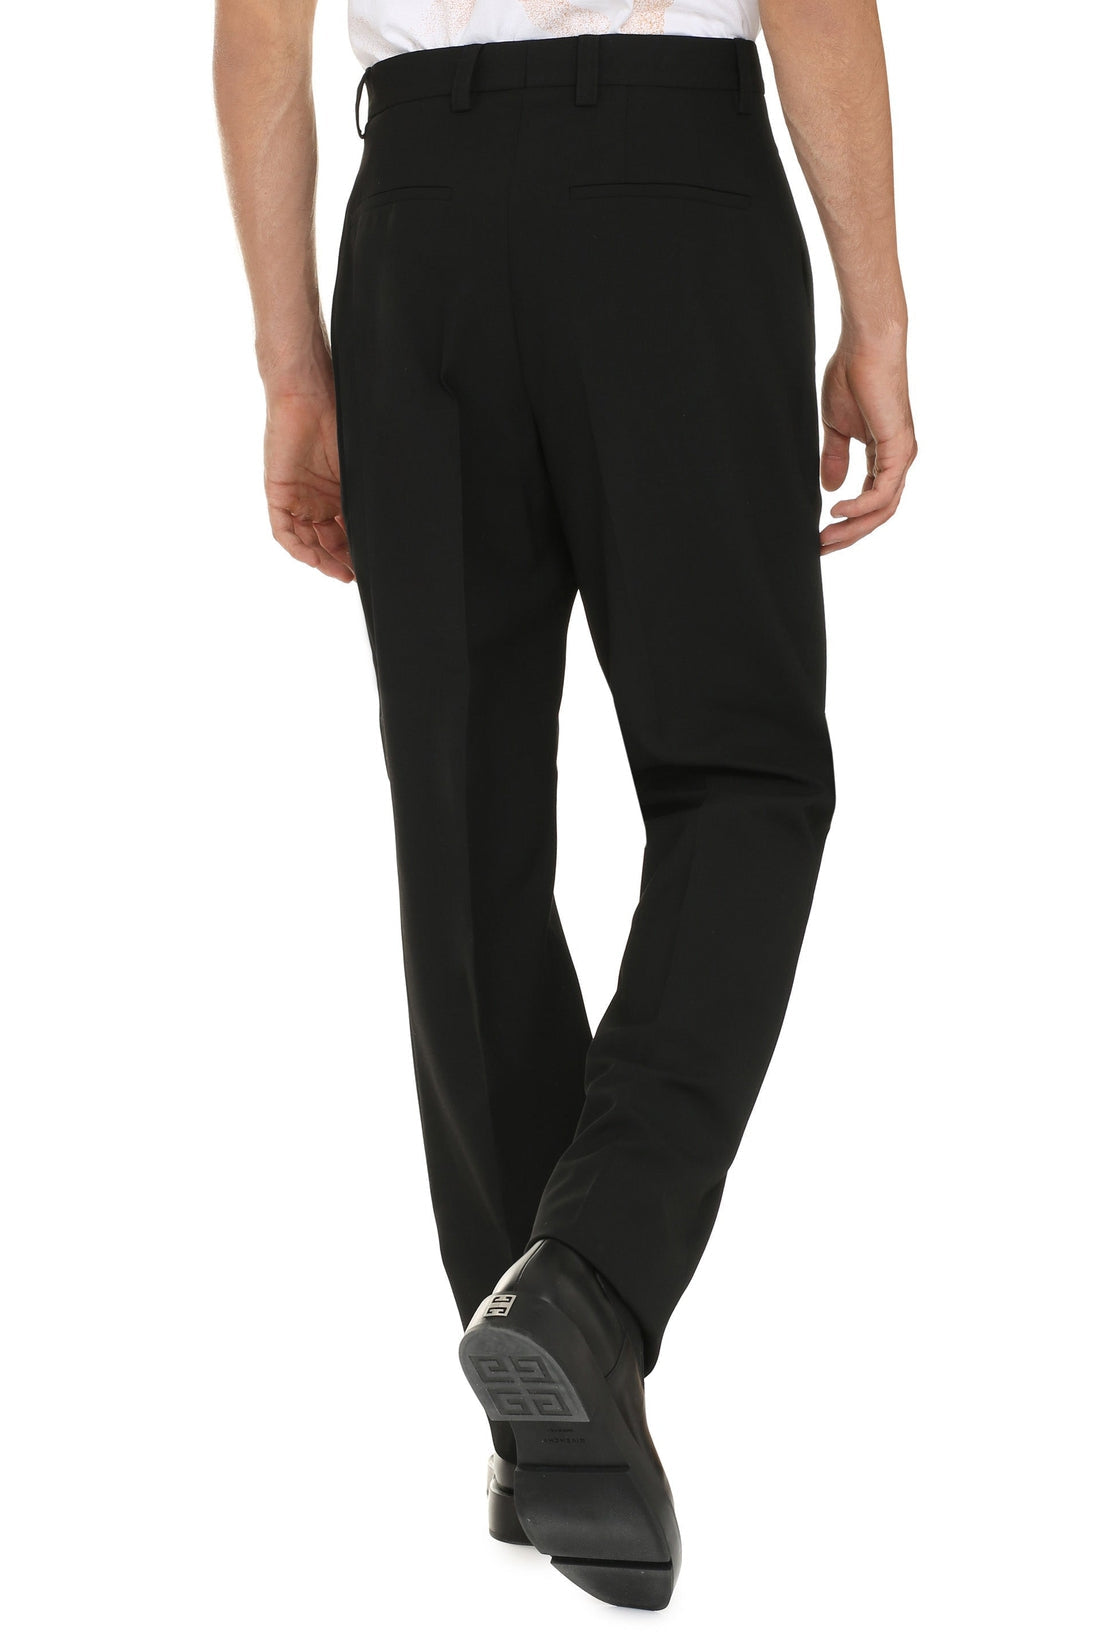 Nanushka-OUTLET-SALE-Jun tailored trousers-ARCHIVIST